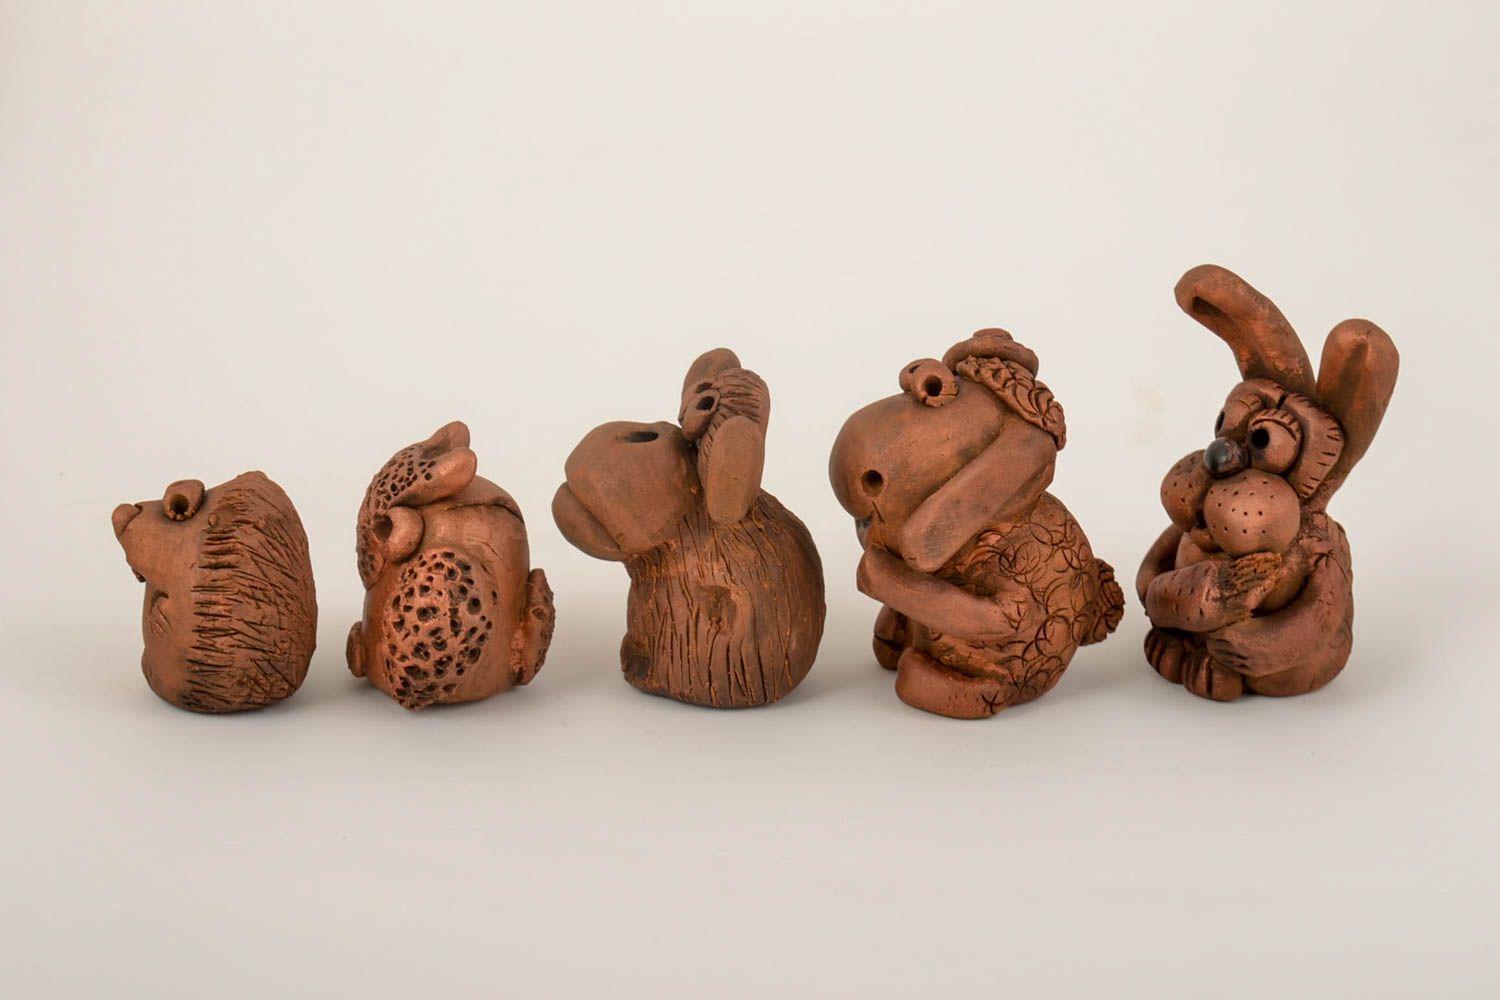 Handmade animal figurines ceramic figurines home decor collectible figurines photo 5